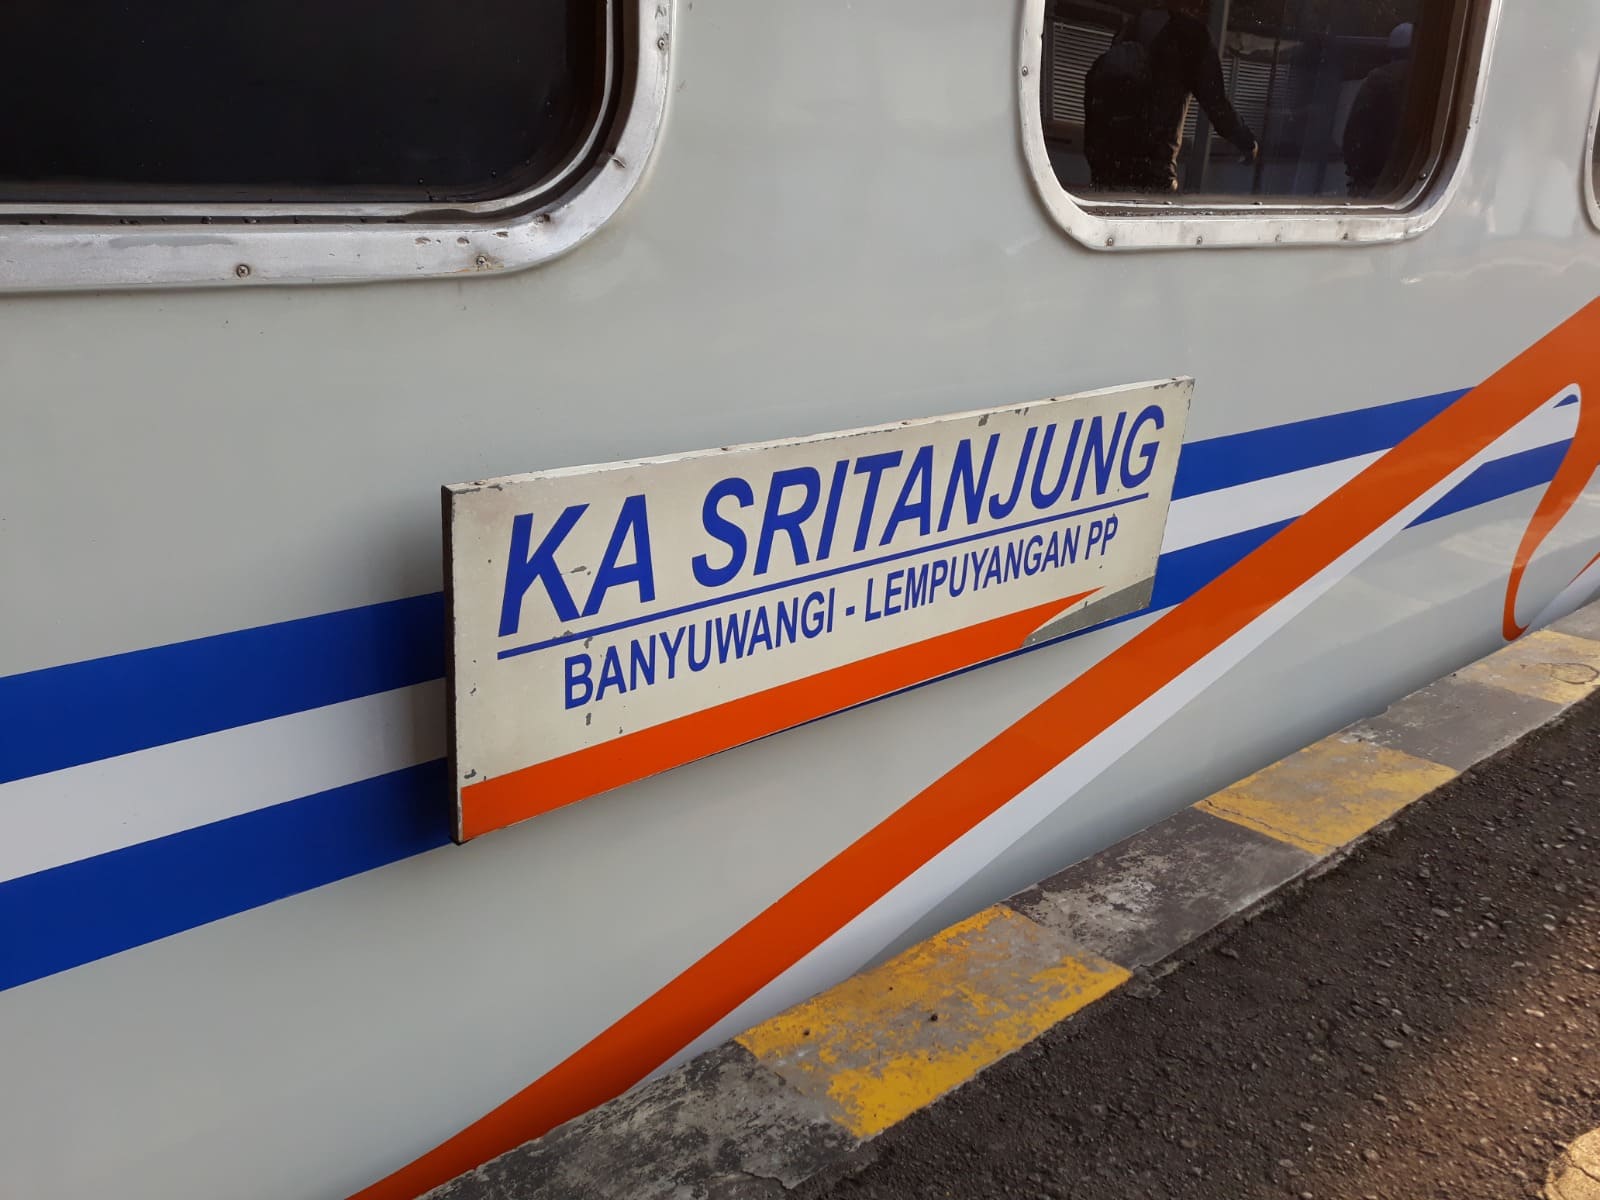 Kereta Api Sri Tanjung.